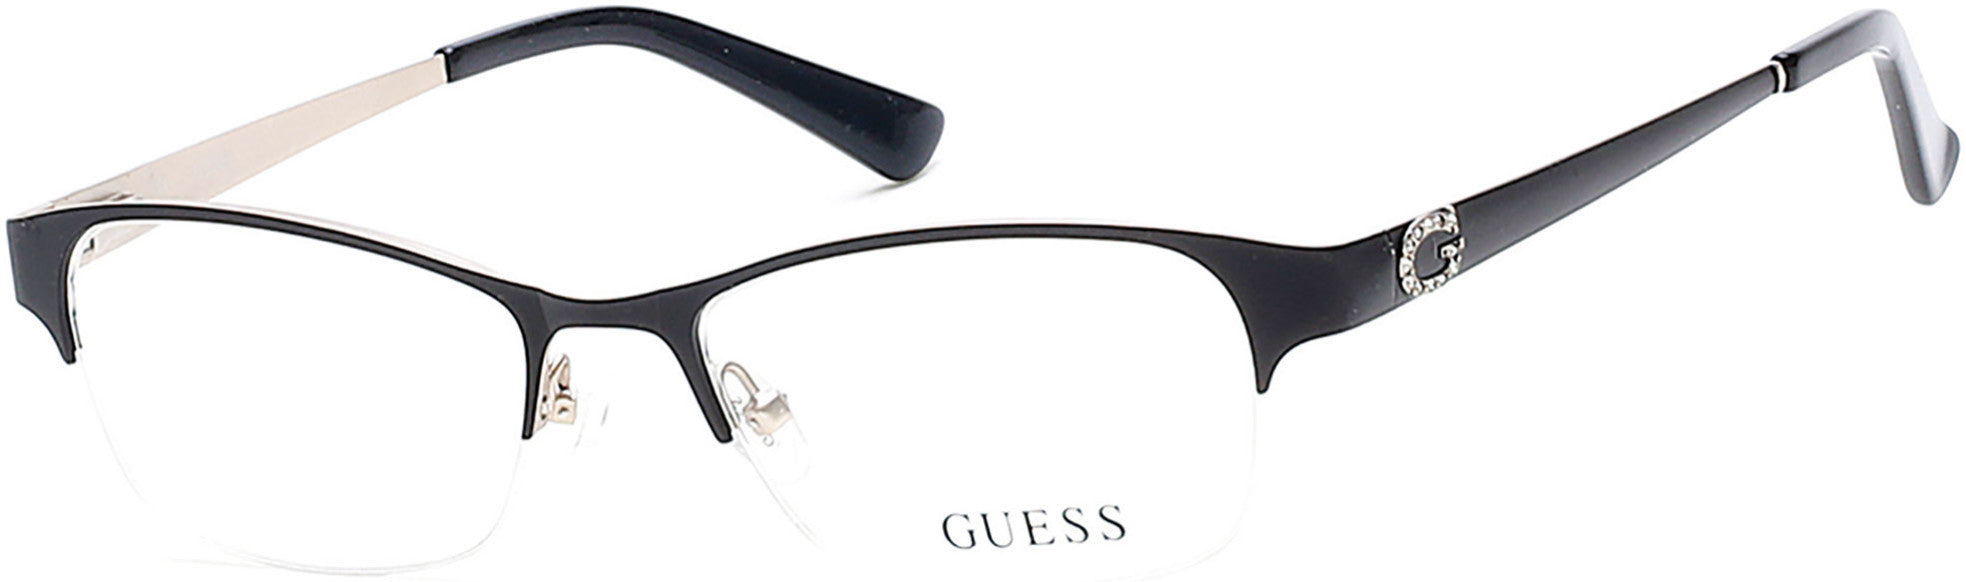 Guess GU2567 Round Eyeglasses 002-002 - Matte Black